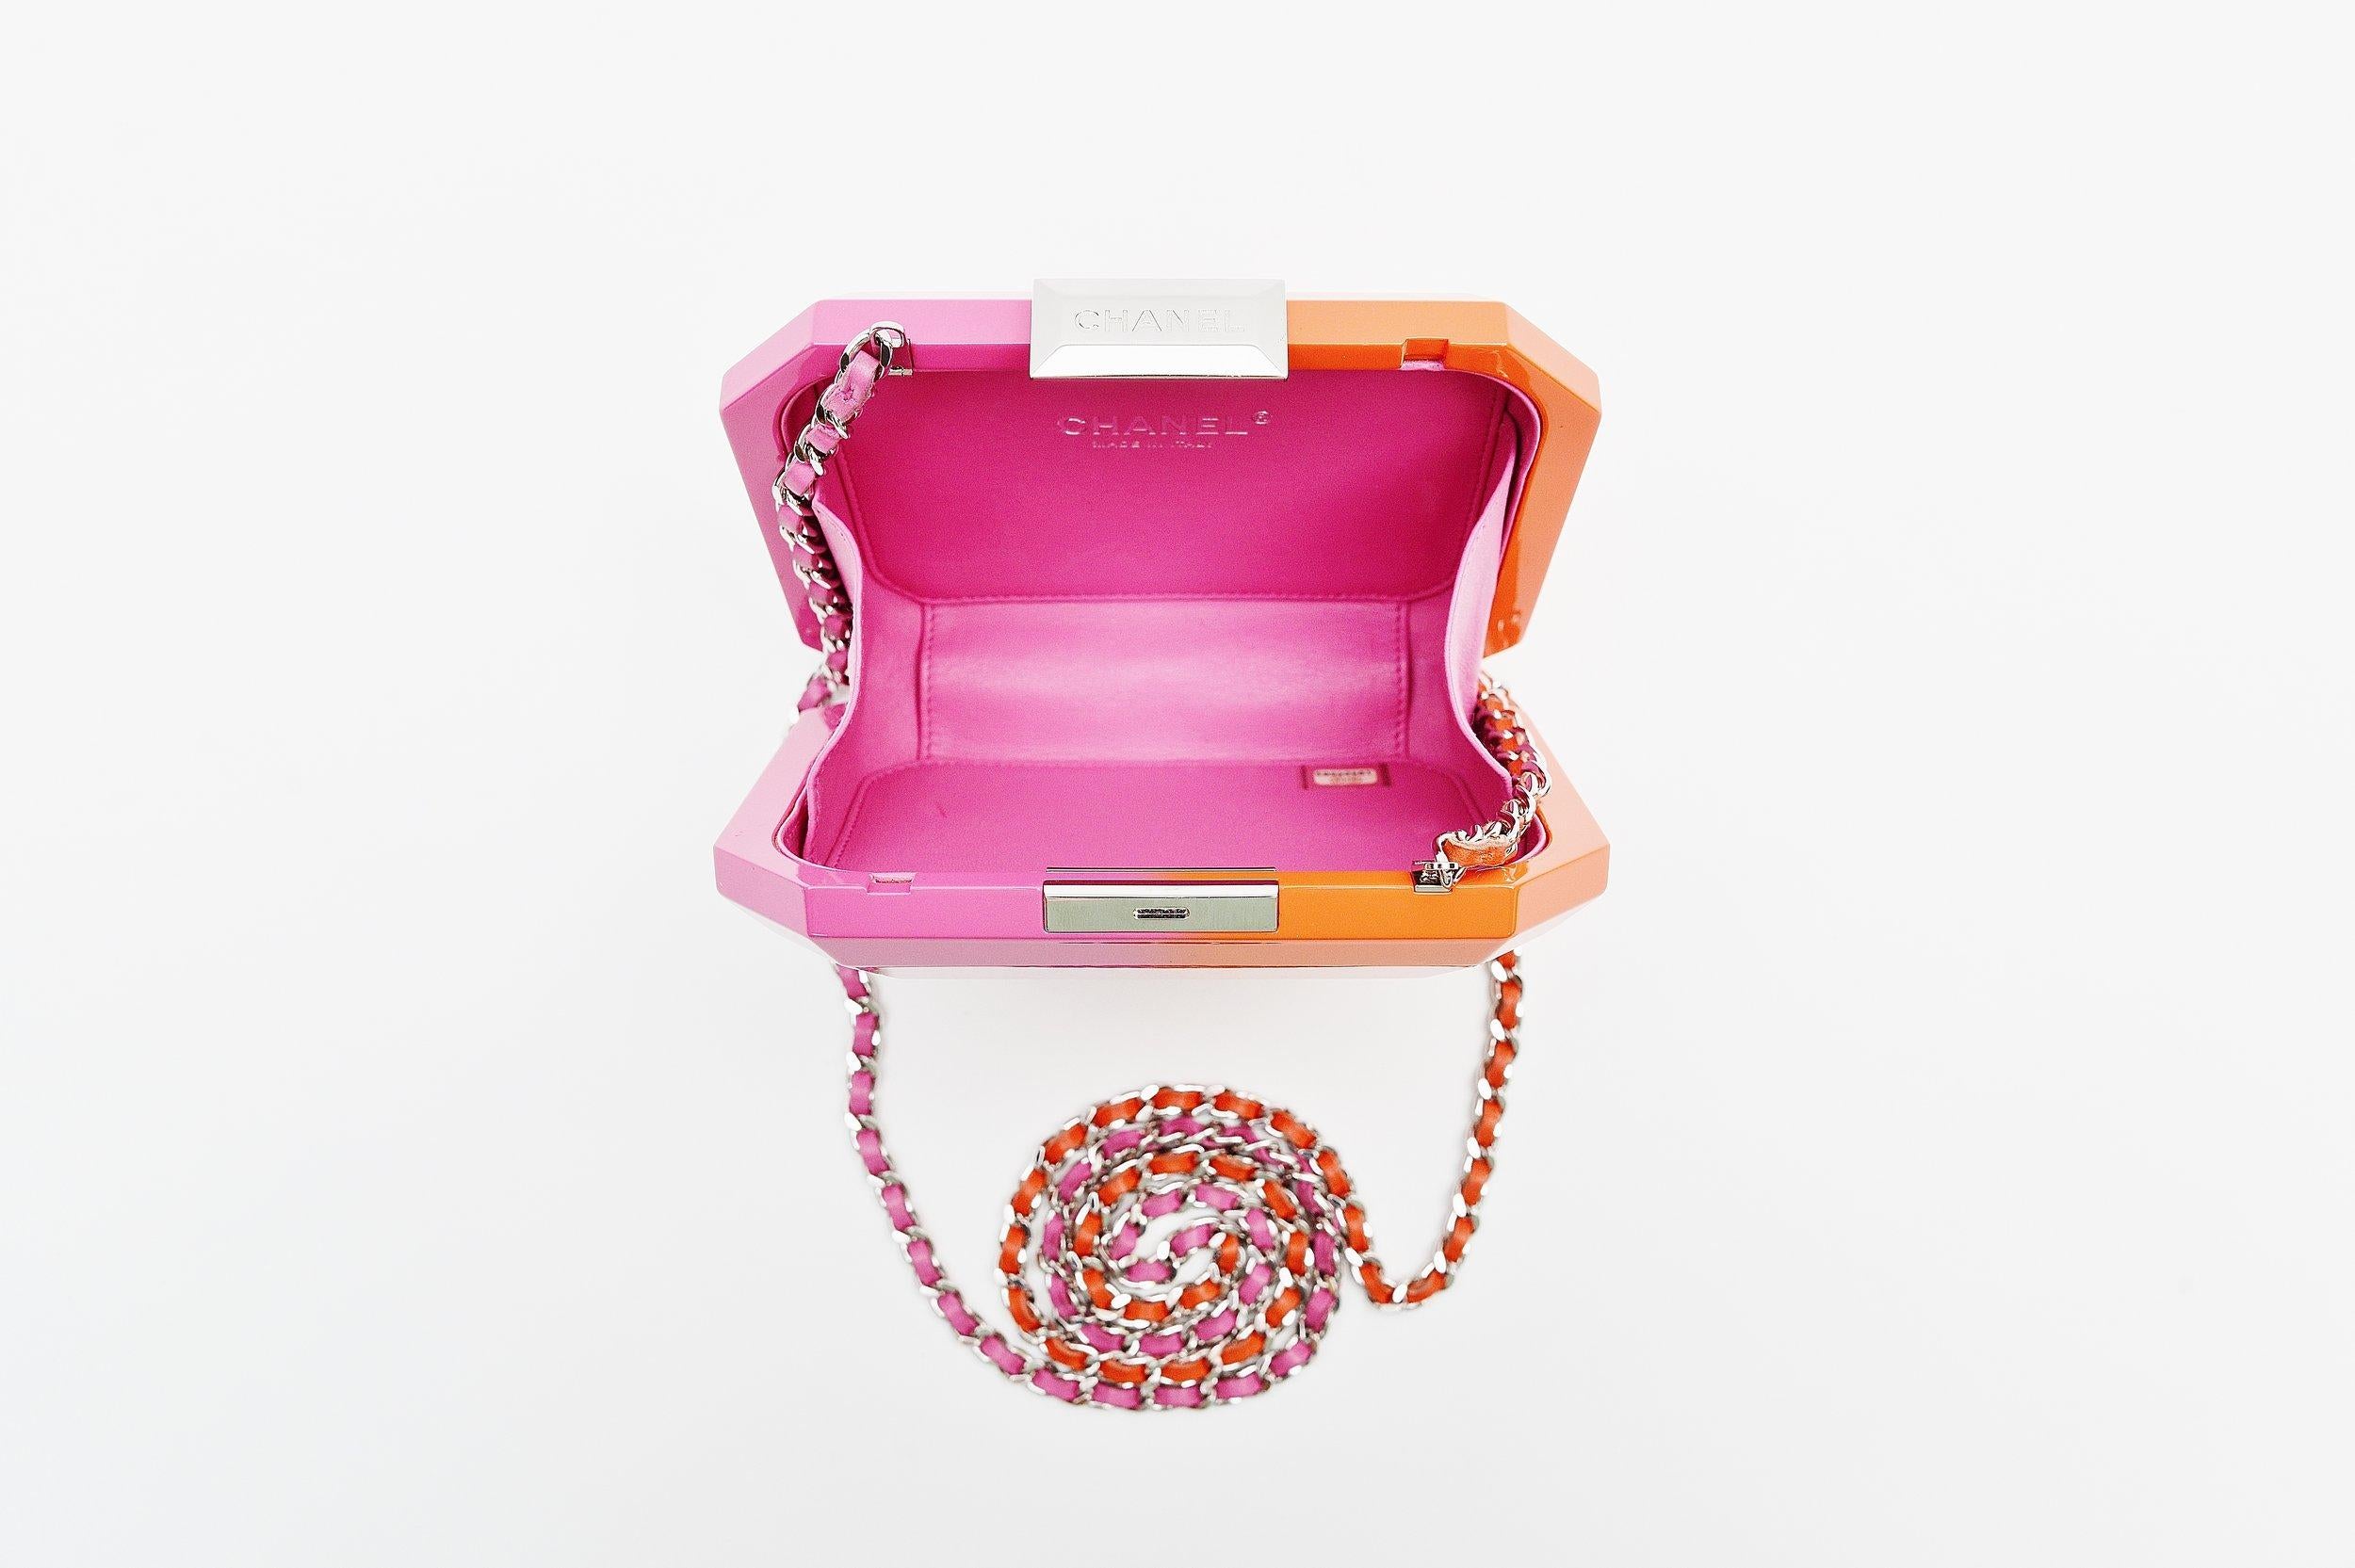 Chanel Runway Minaudière Ombre Pink & Orange Hard Shell Handbag Clutch 2